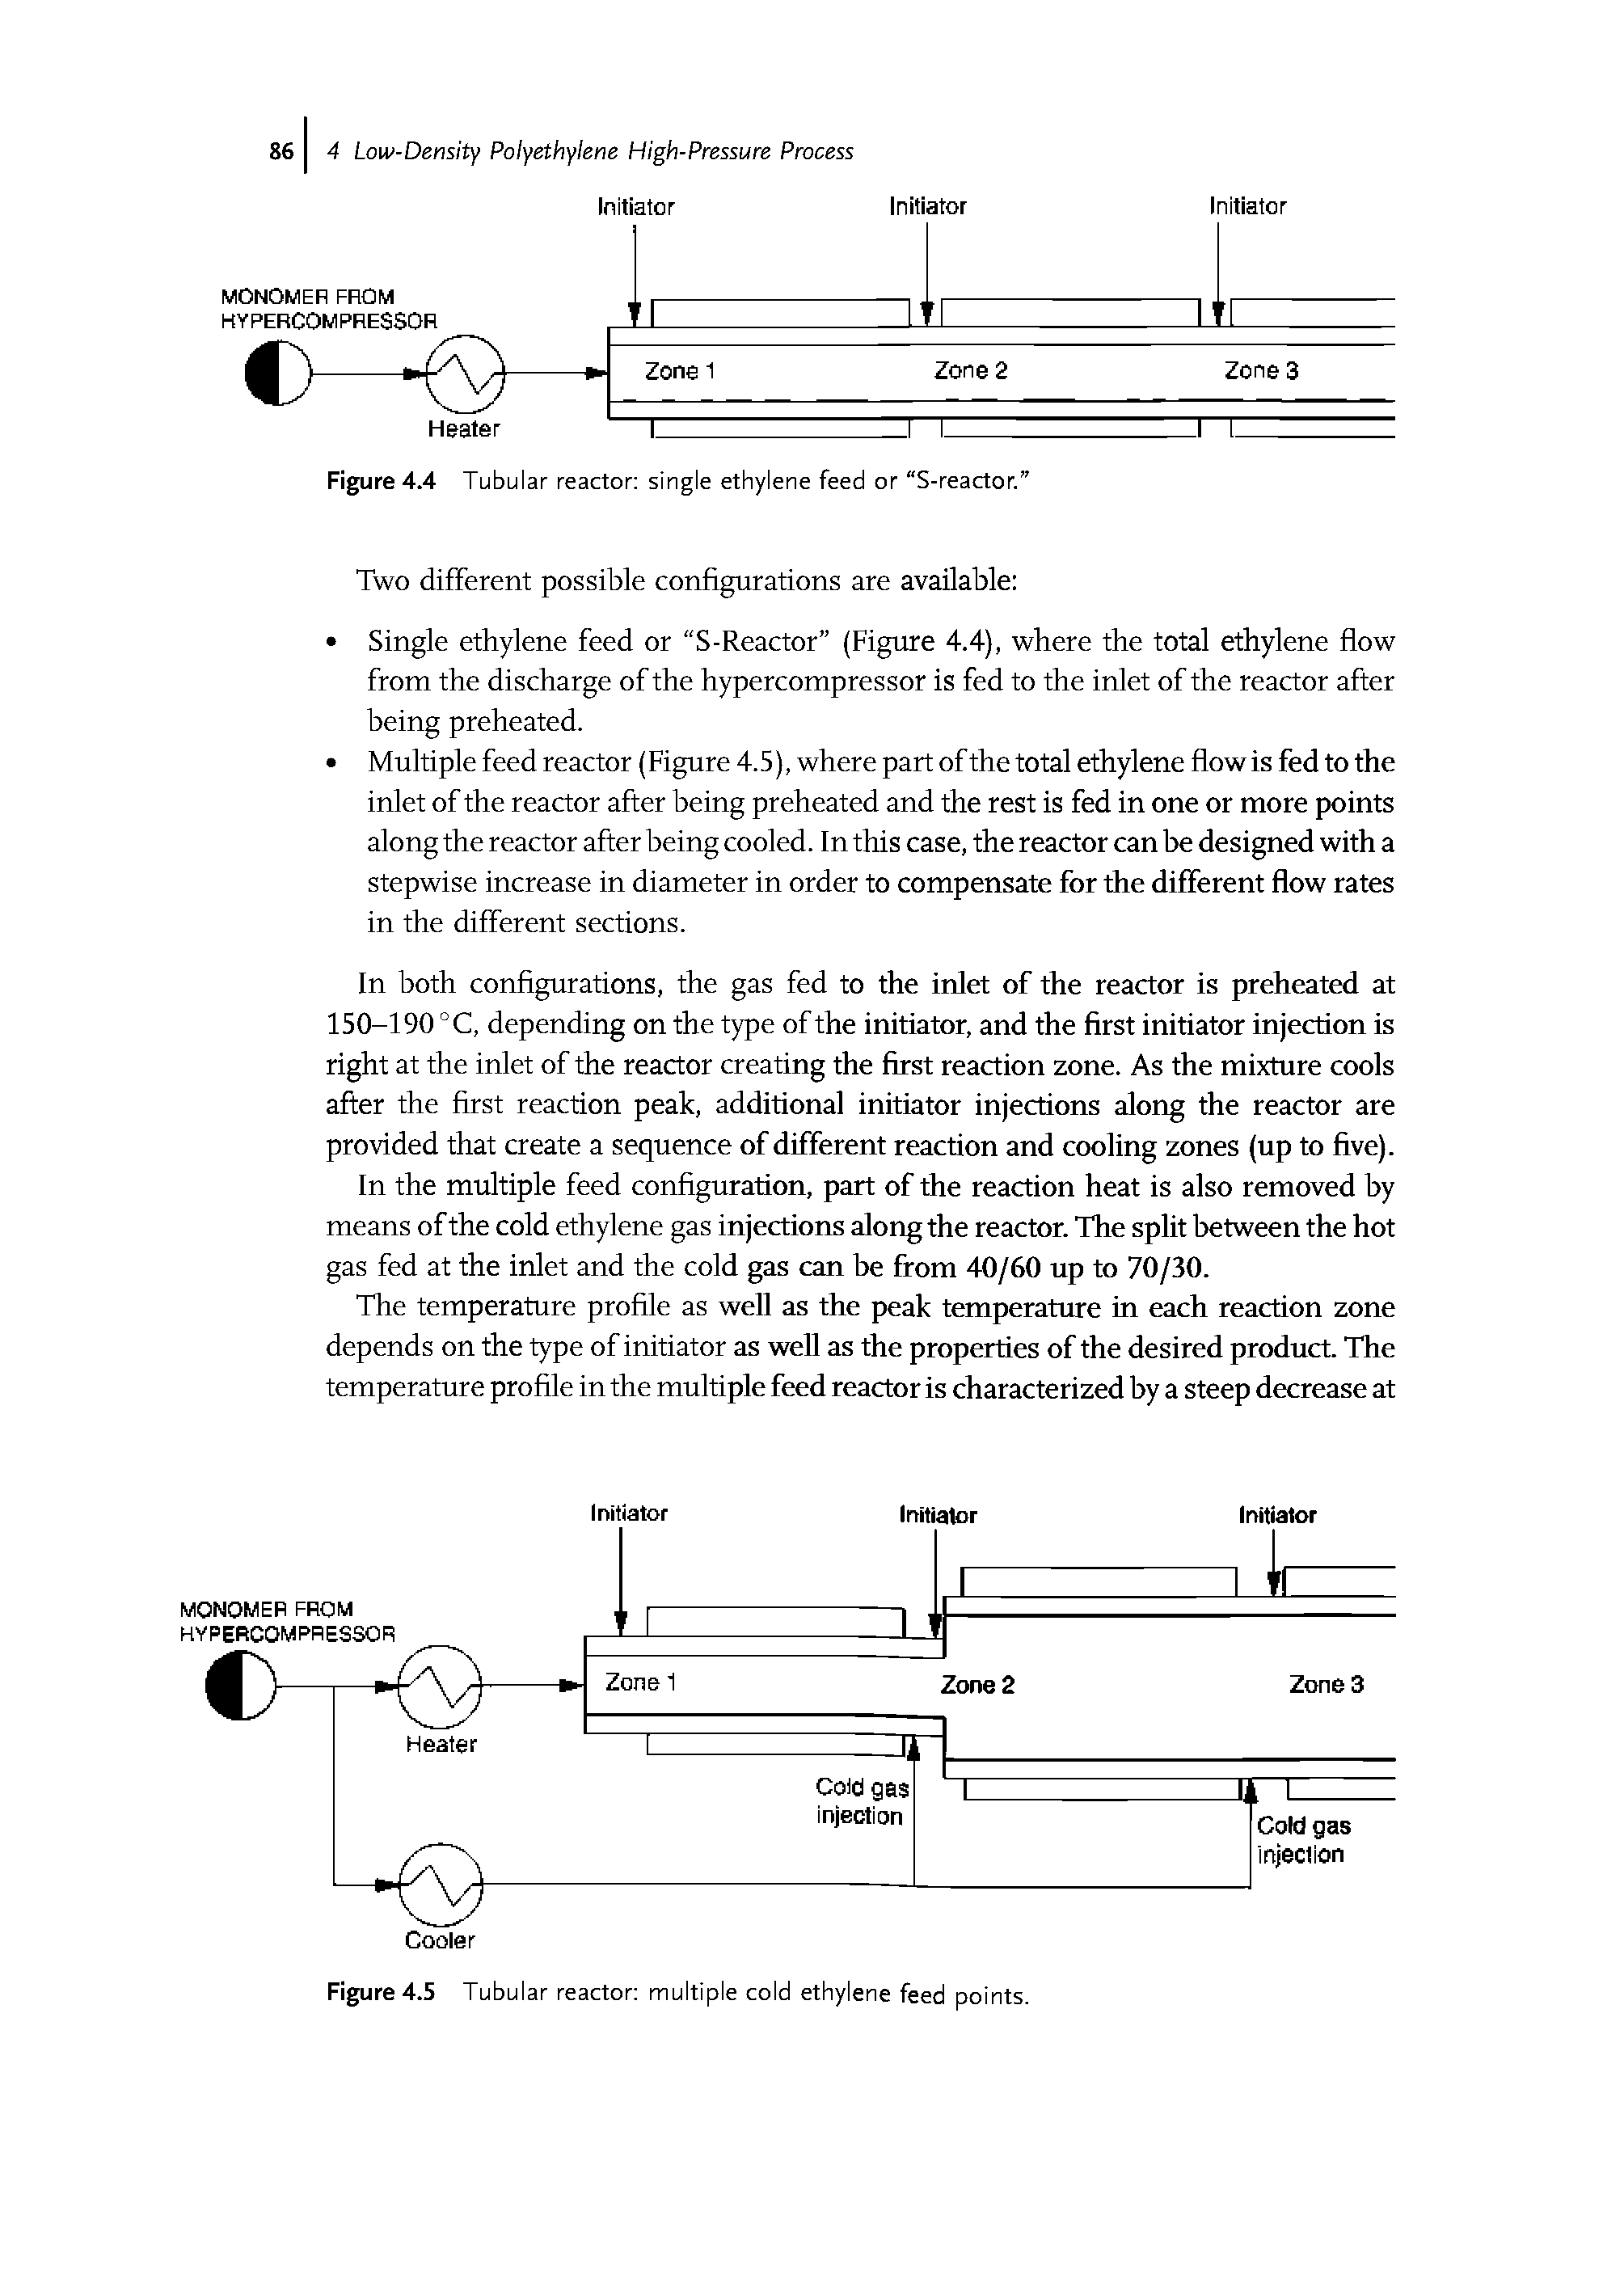 Figure 4.5 Tubular reactor multiple cold ethylene feed points.